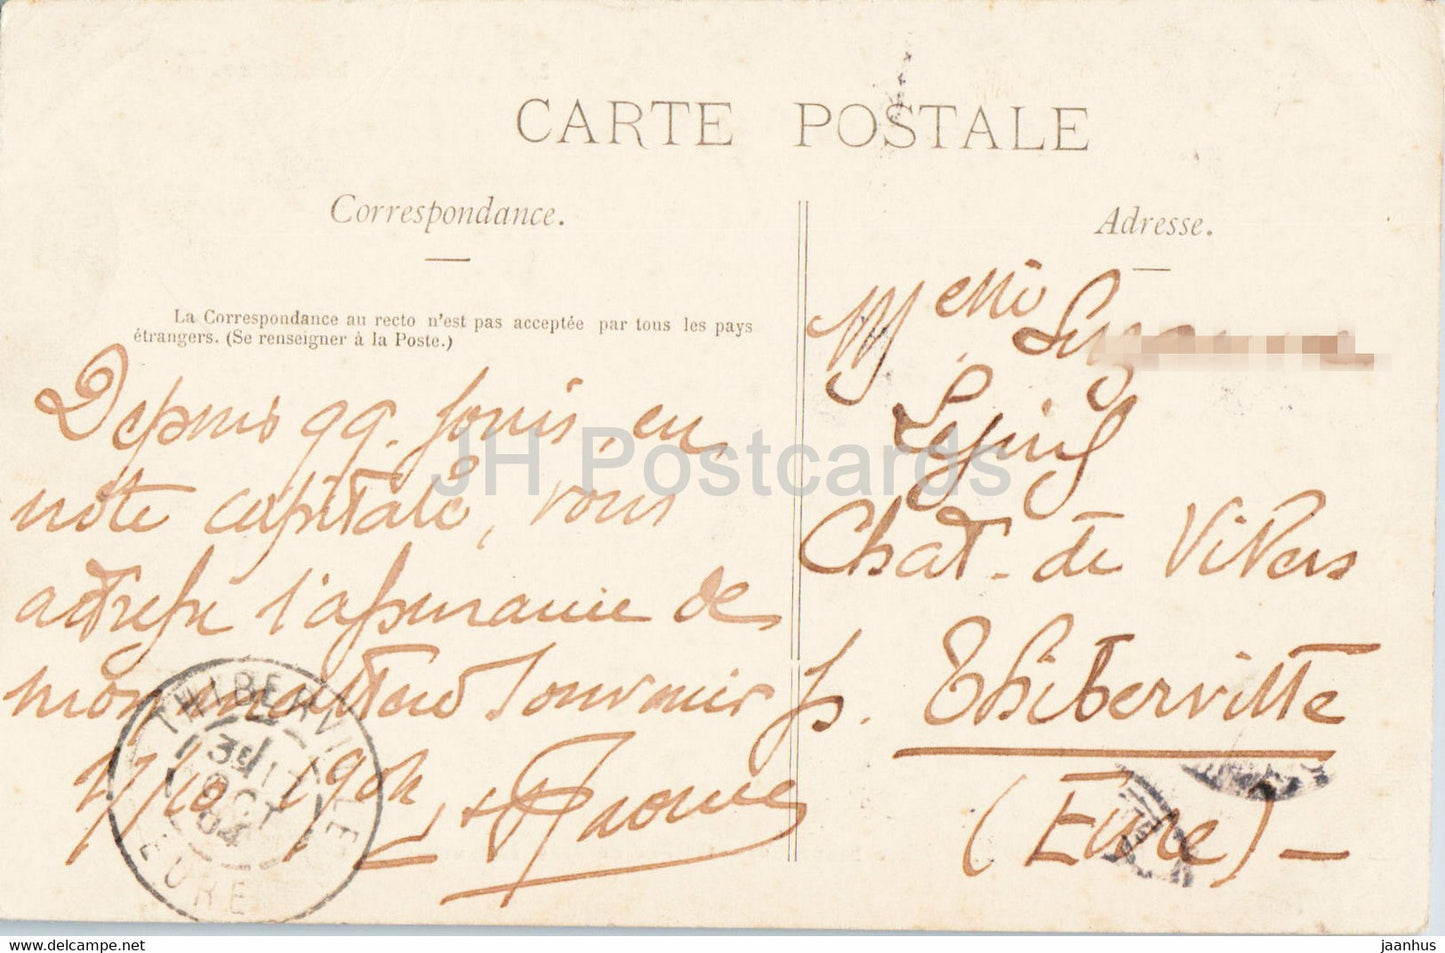 Nancy - Place Stanislas - Grilles de Jean Lamour - old postcard - 1904 - France - used